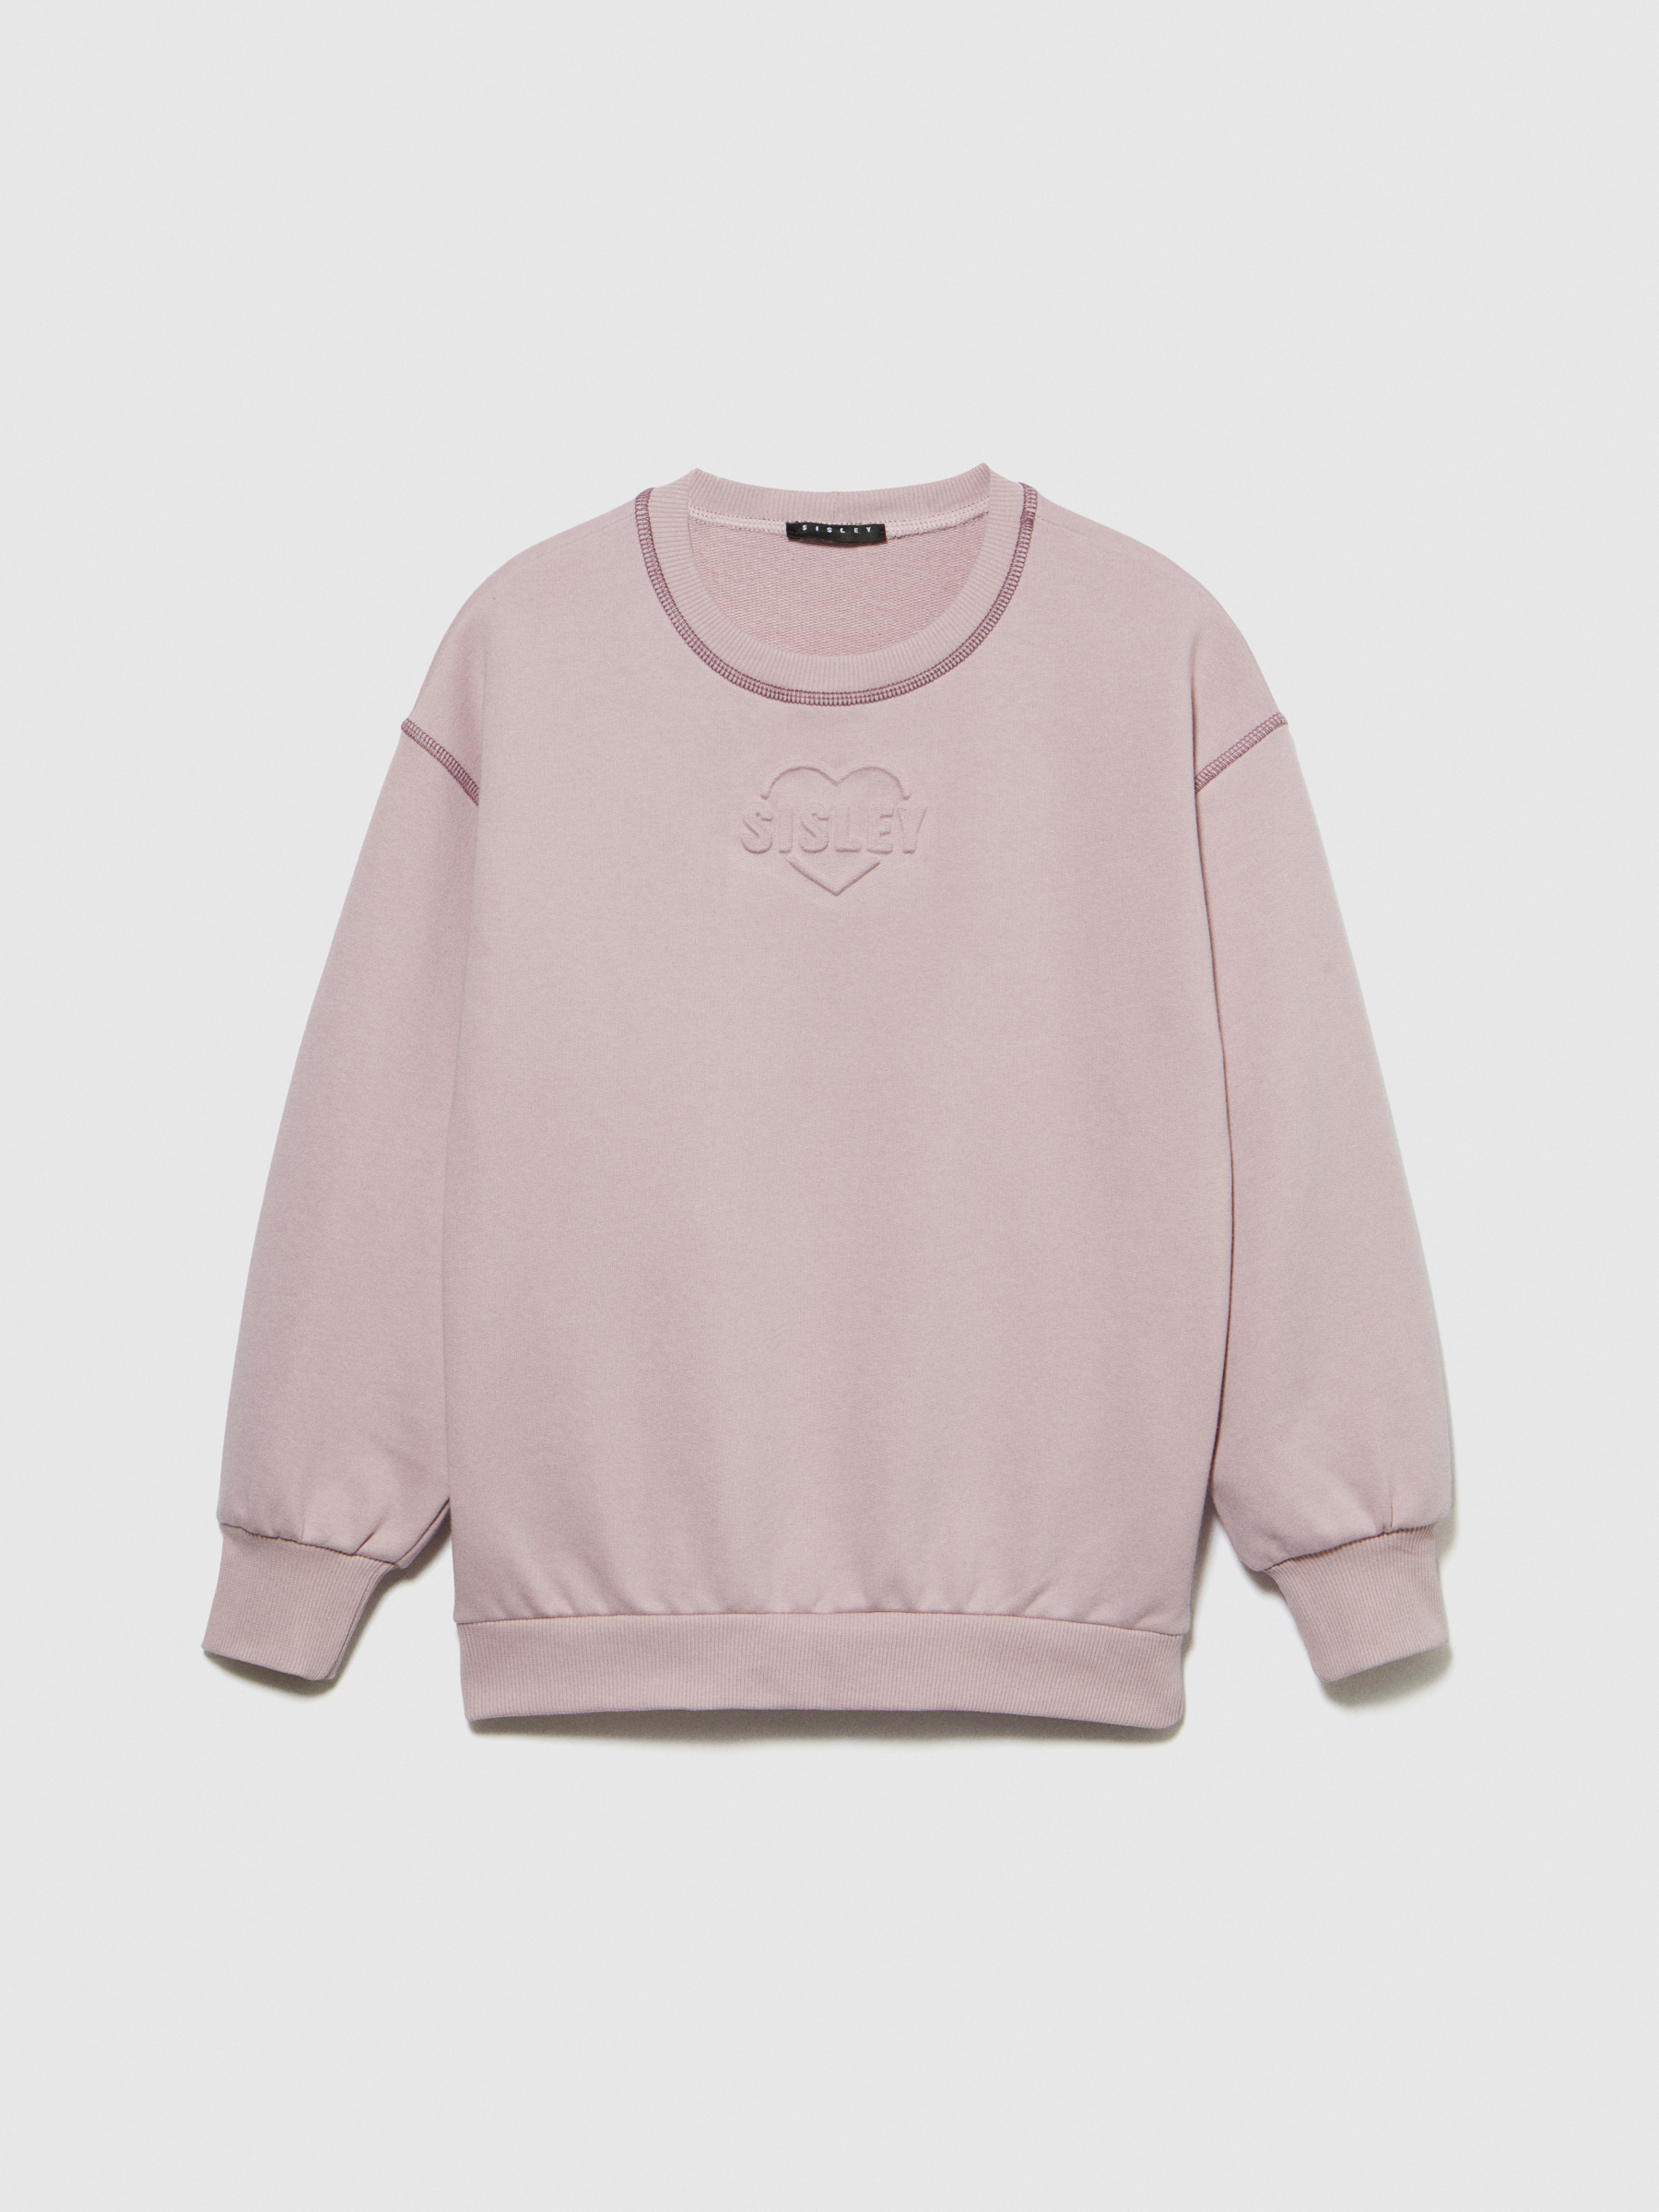 Sisley Young - Sweatshirt With Embossed Print, Woman, Pastel Pink, Size: XS